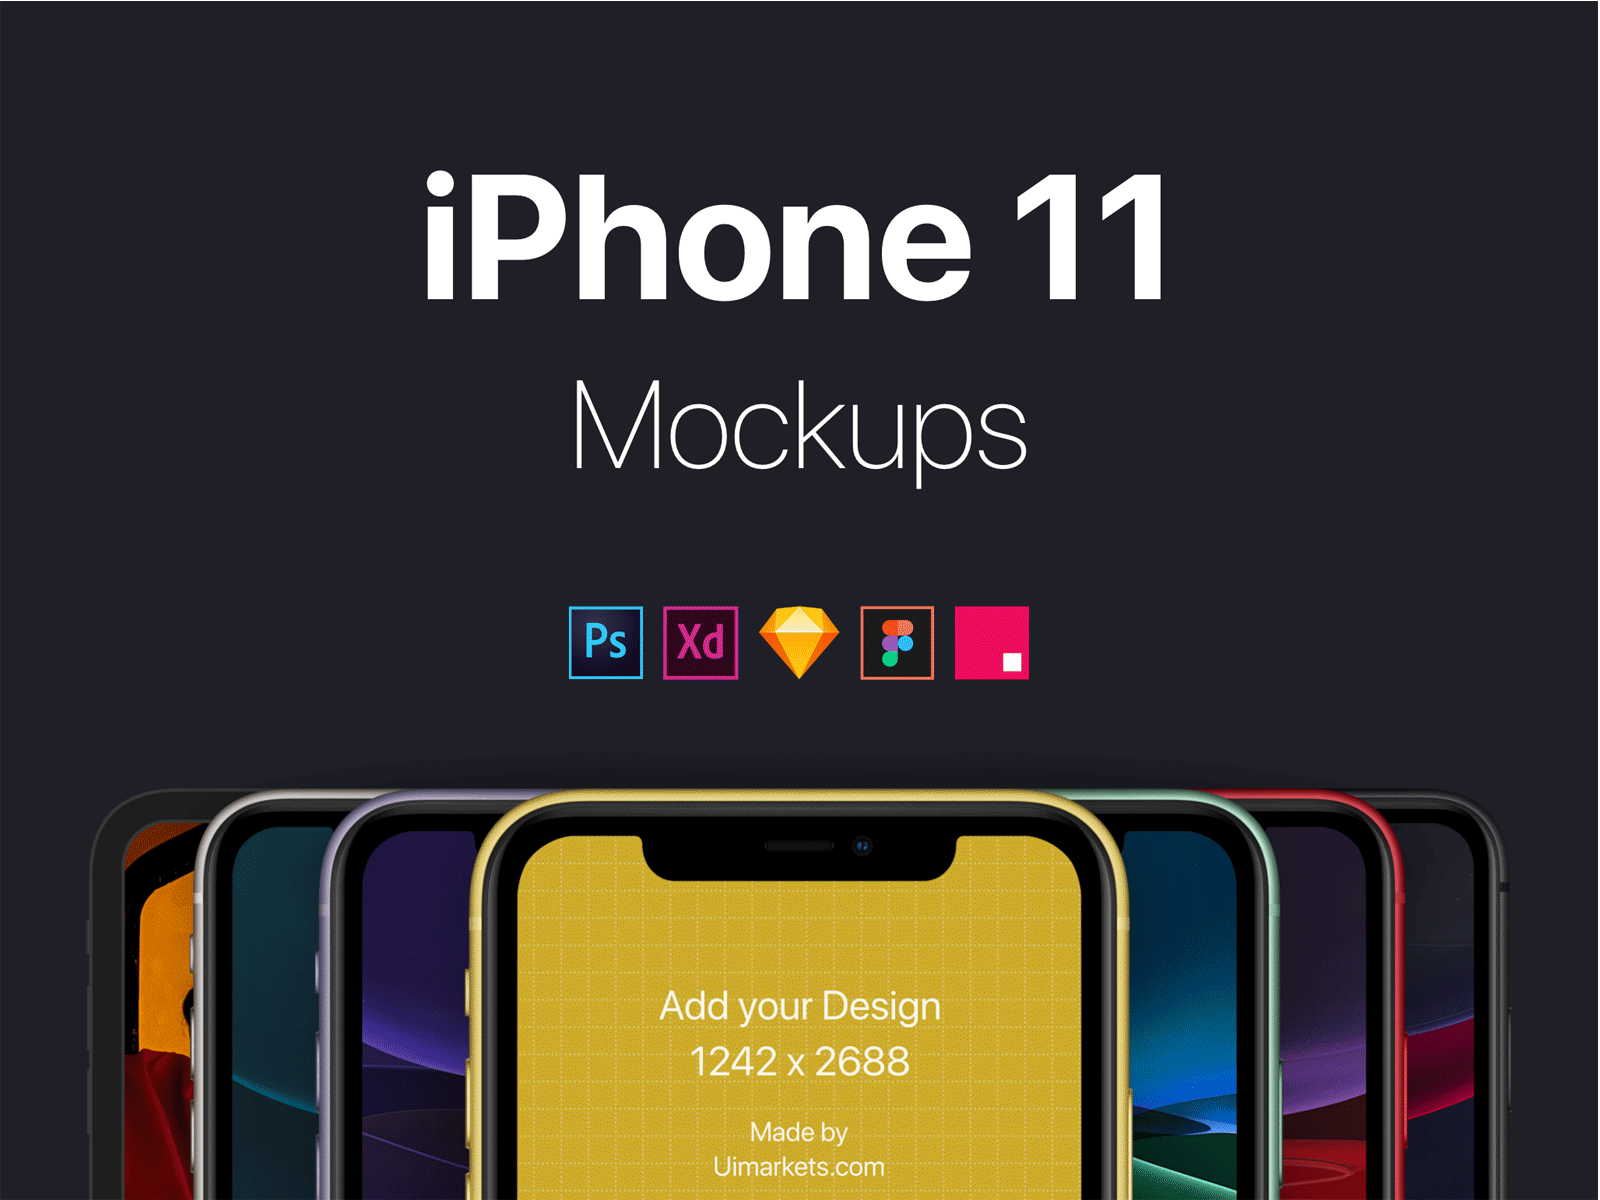 iPhone 11 Mockups invision